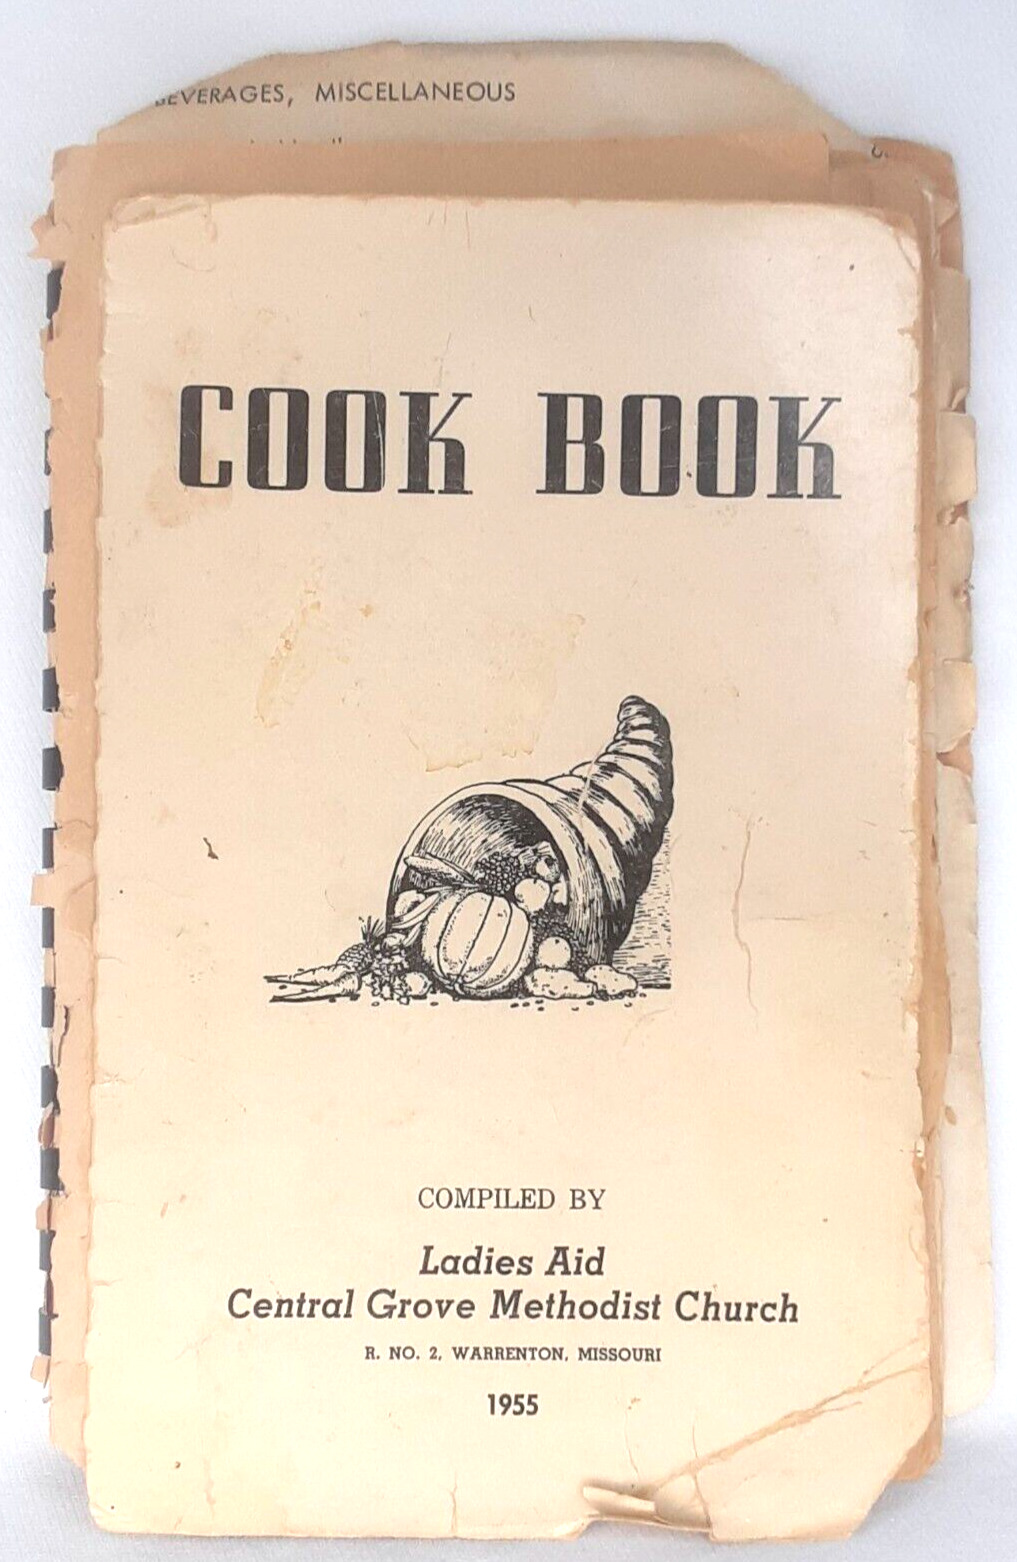 Recipes Ladies Aid Methodist Cookbook Copyright 1955 Vintage Cookery and Cuisine